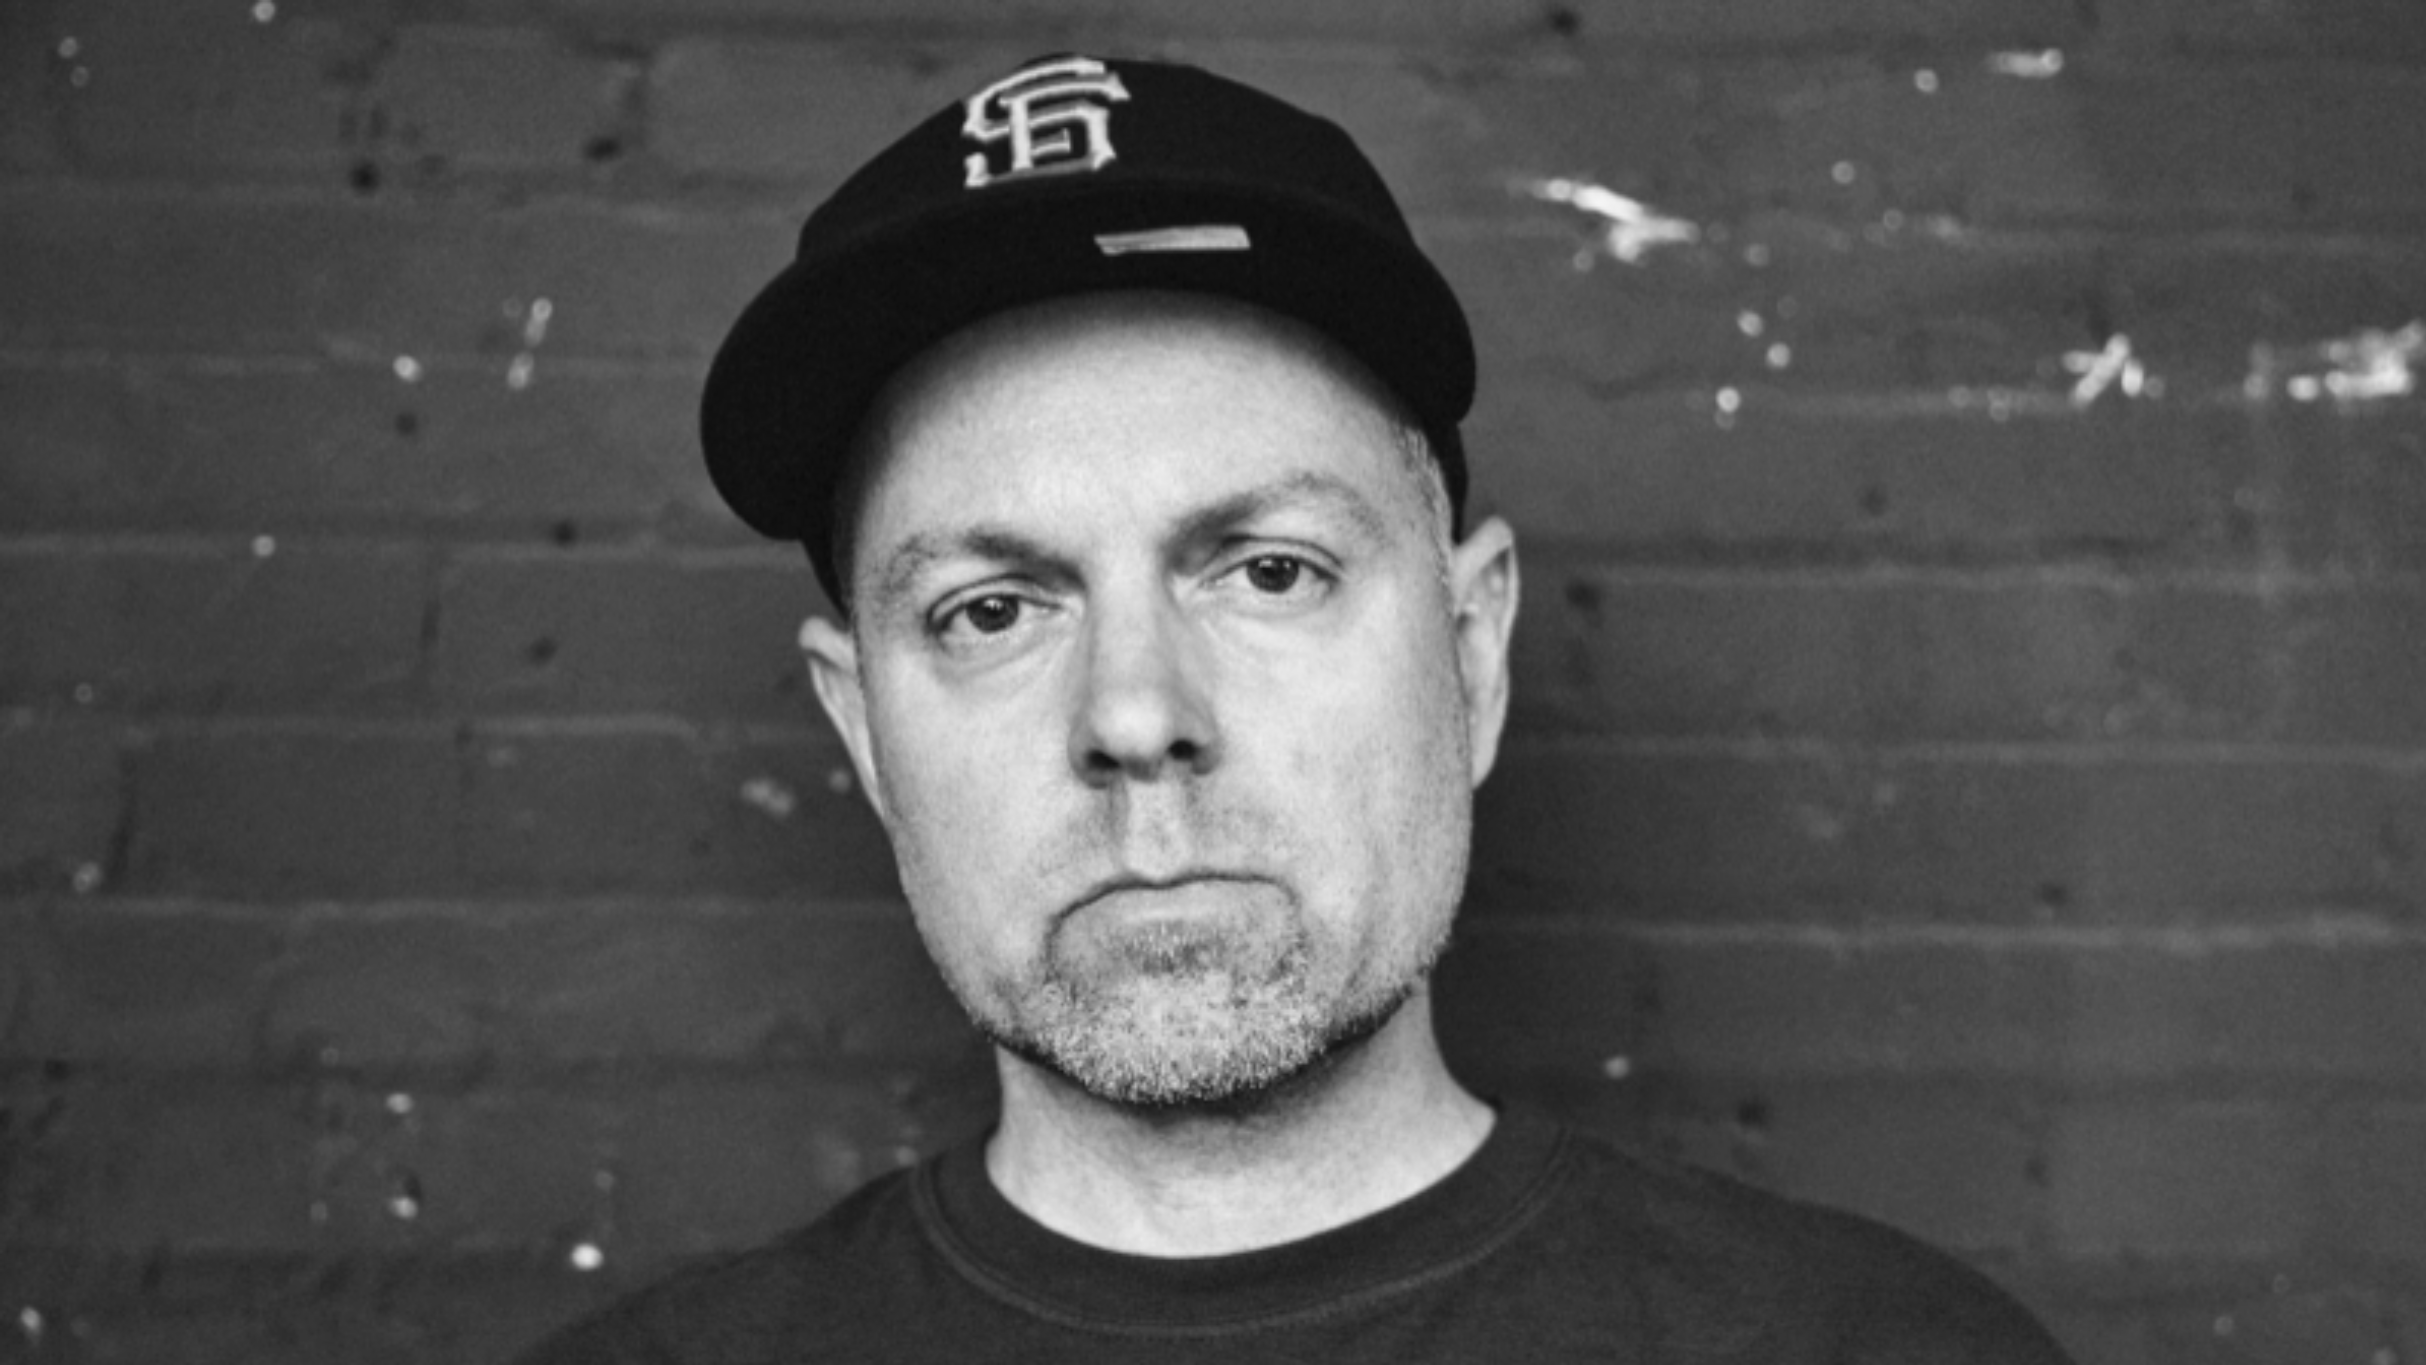 DJ Shadow in Cork promo photo for Artist presale offer code